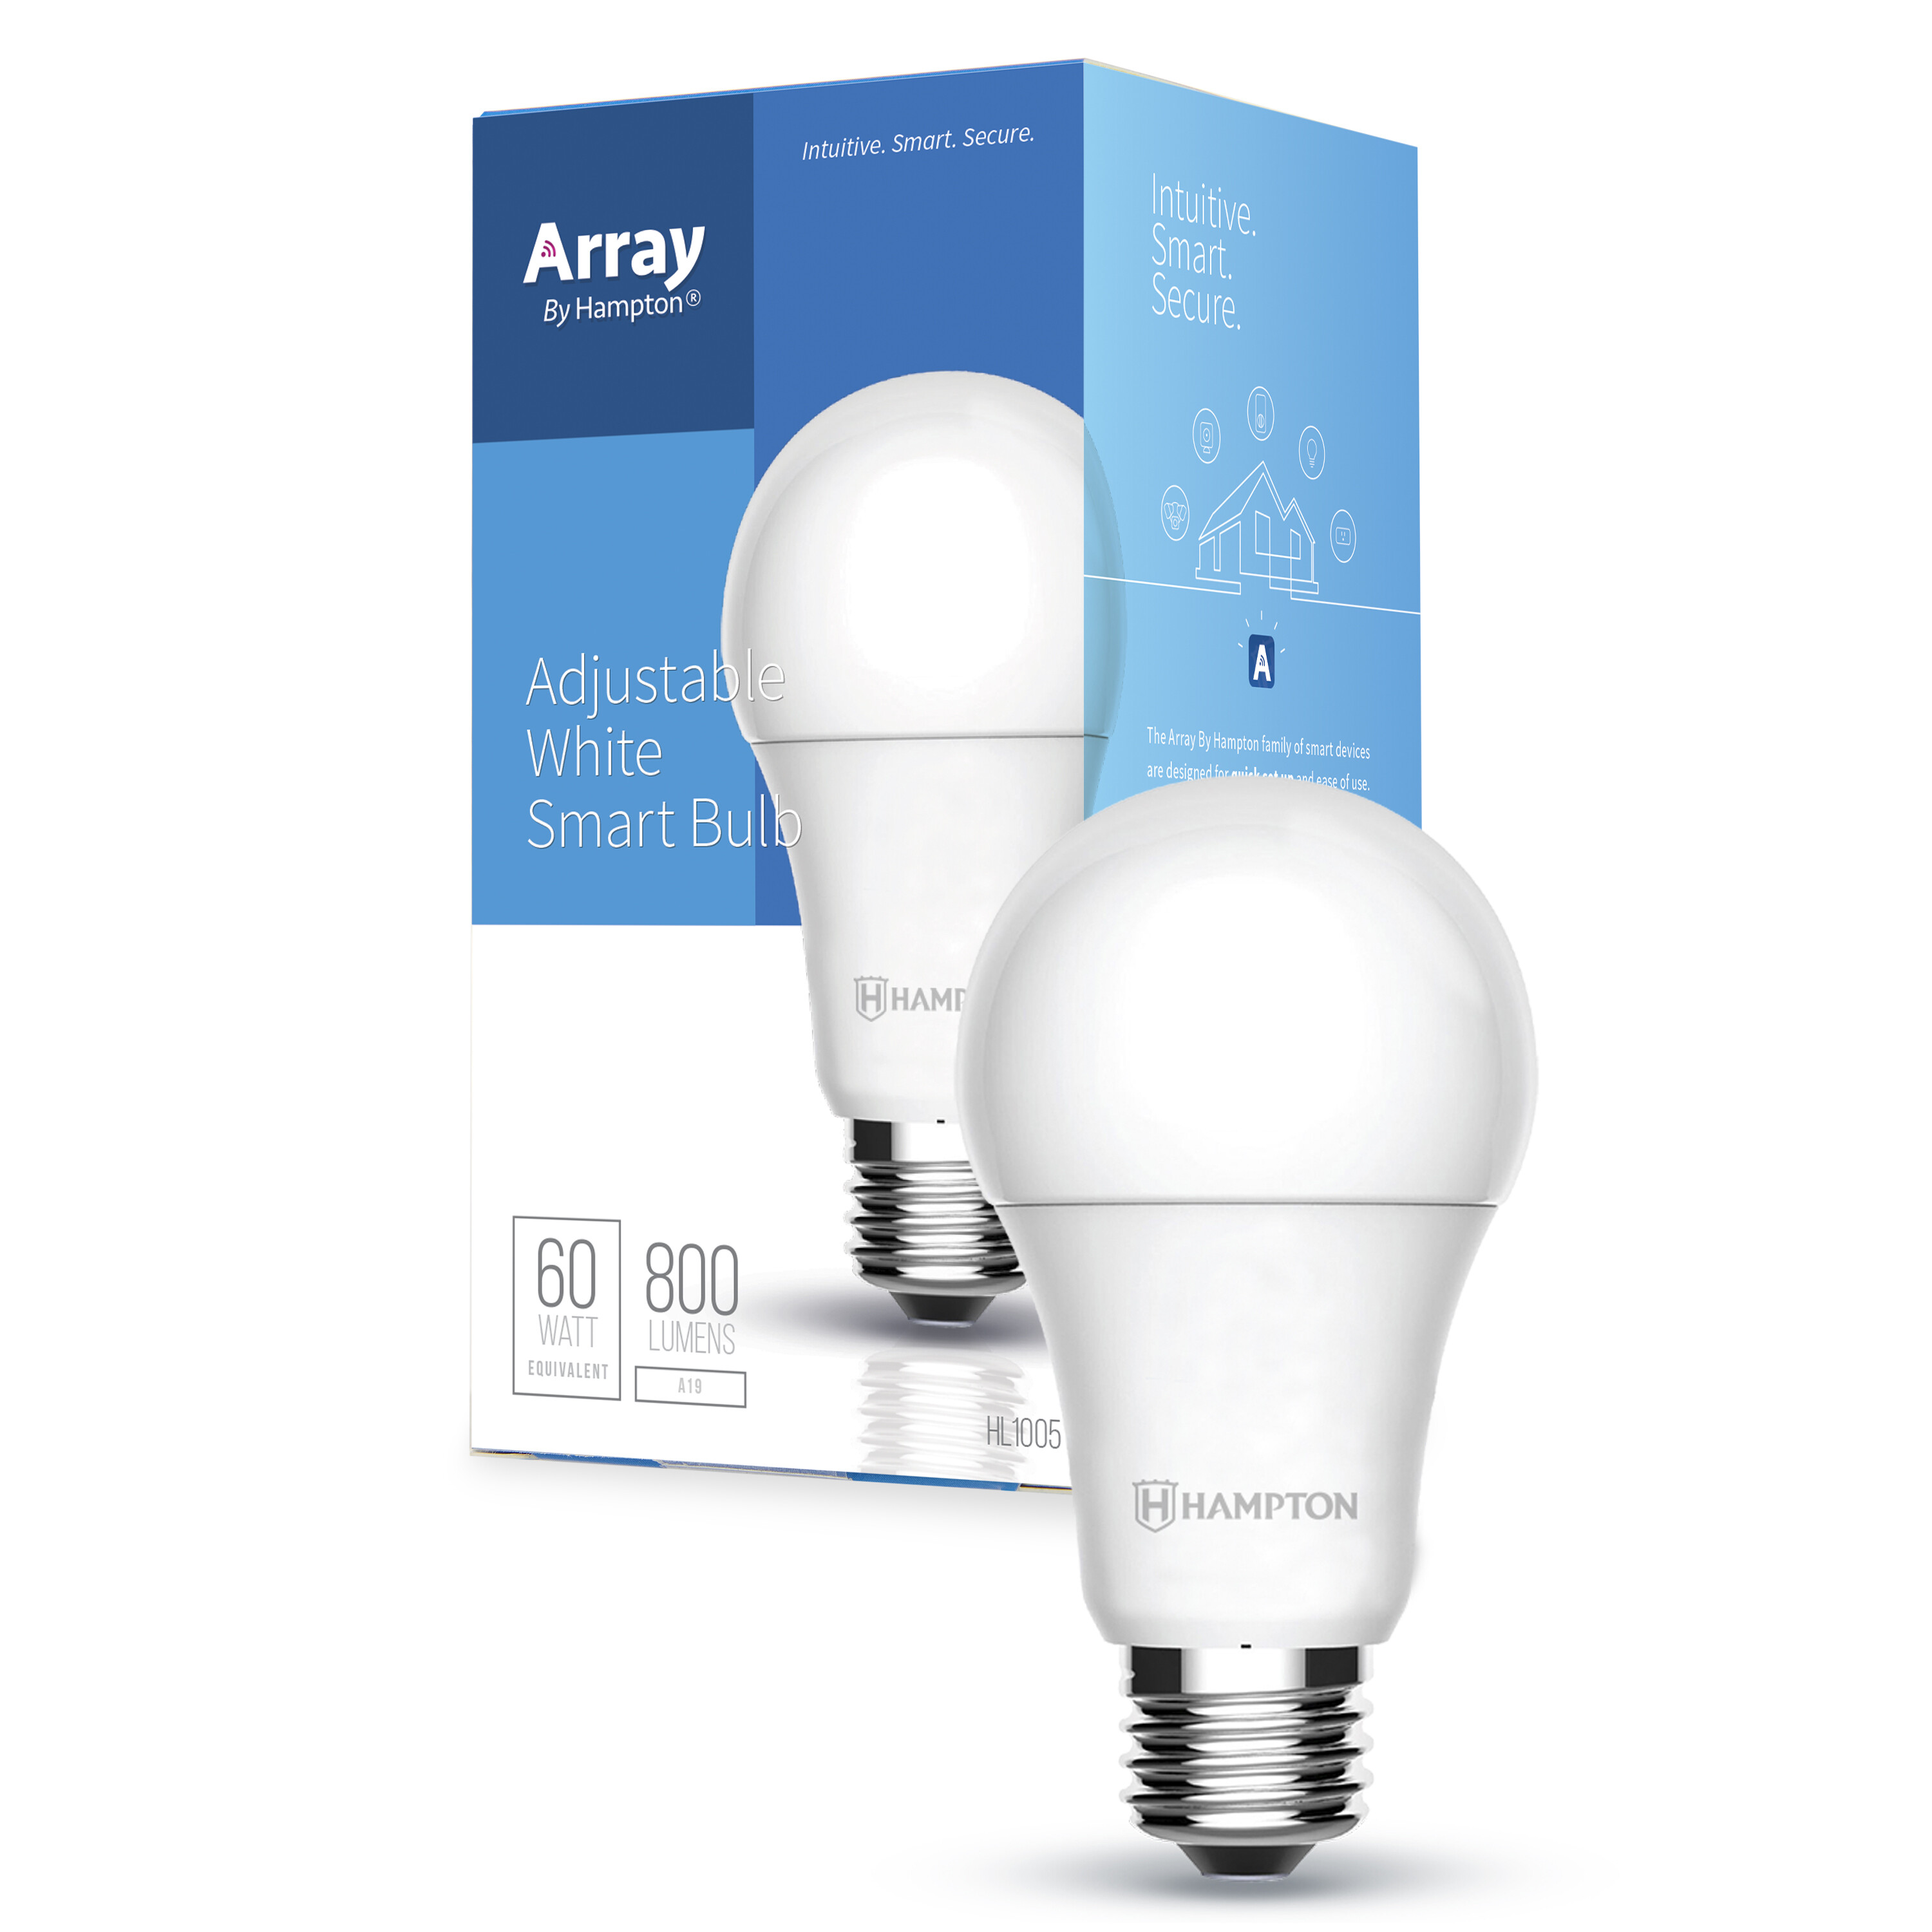 Adjustable White Smart Wi-Fi A19 LED Light Bulb